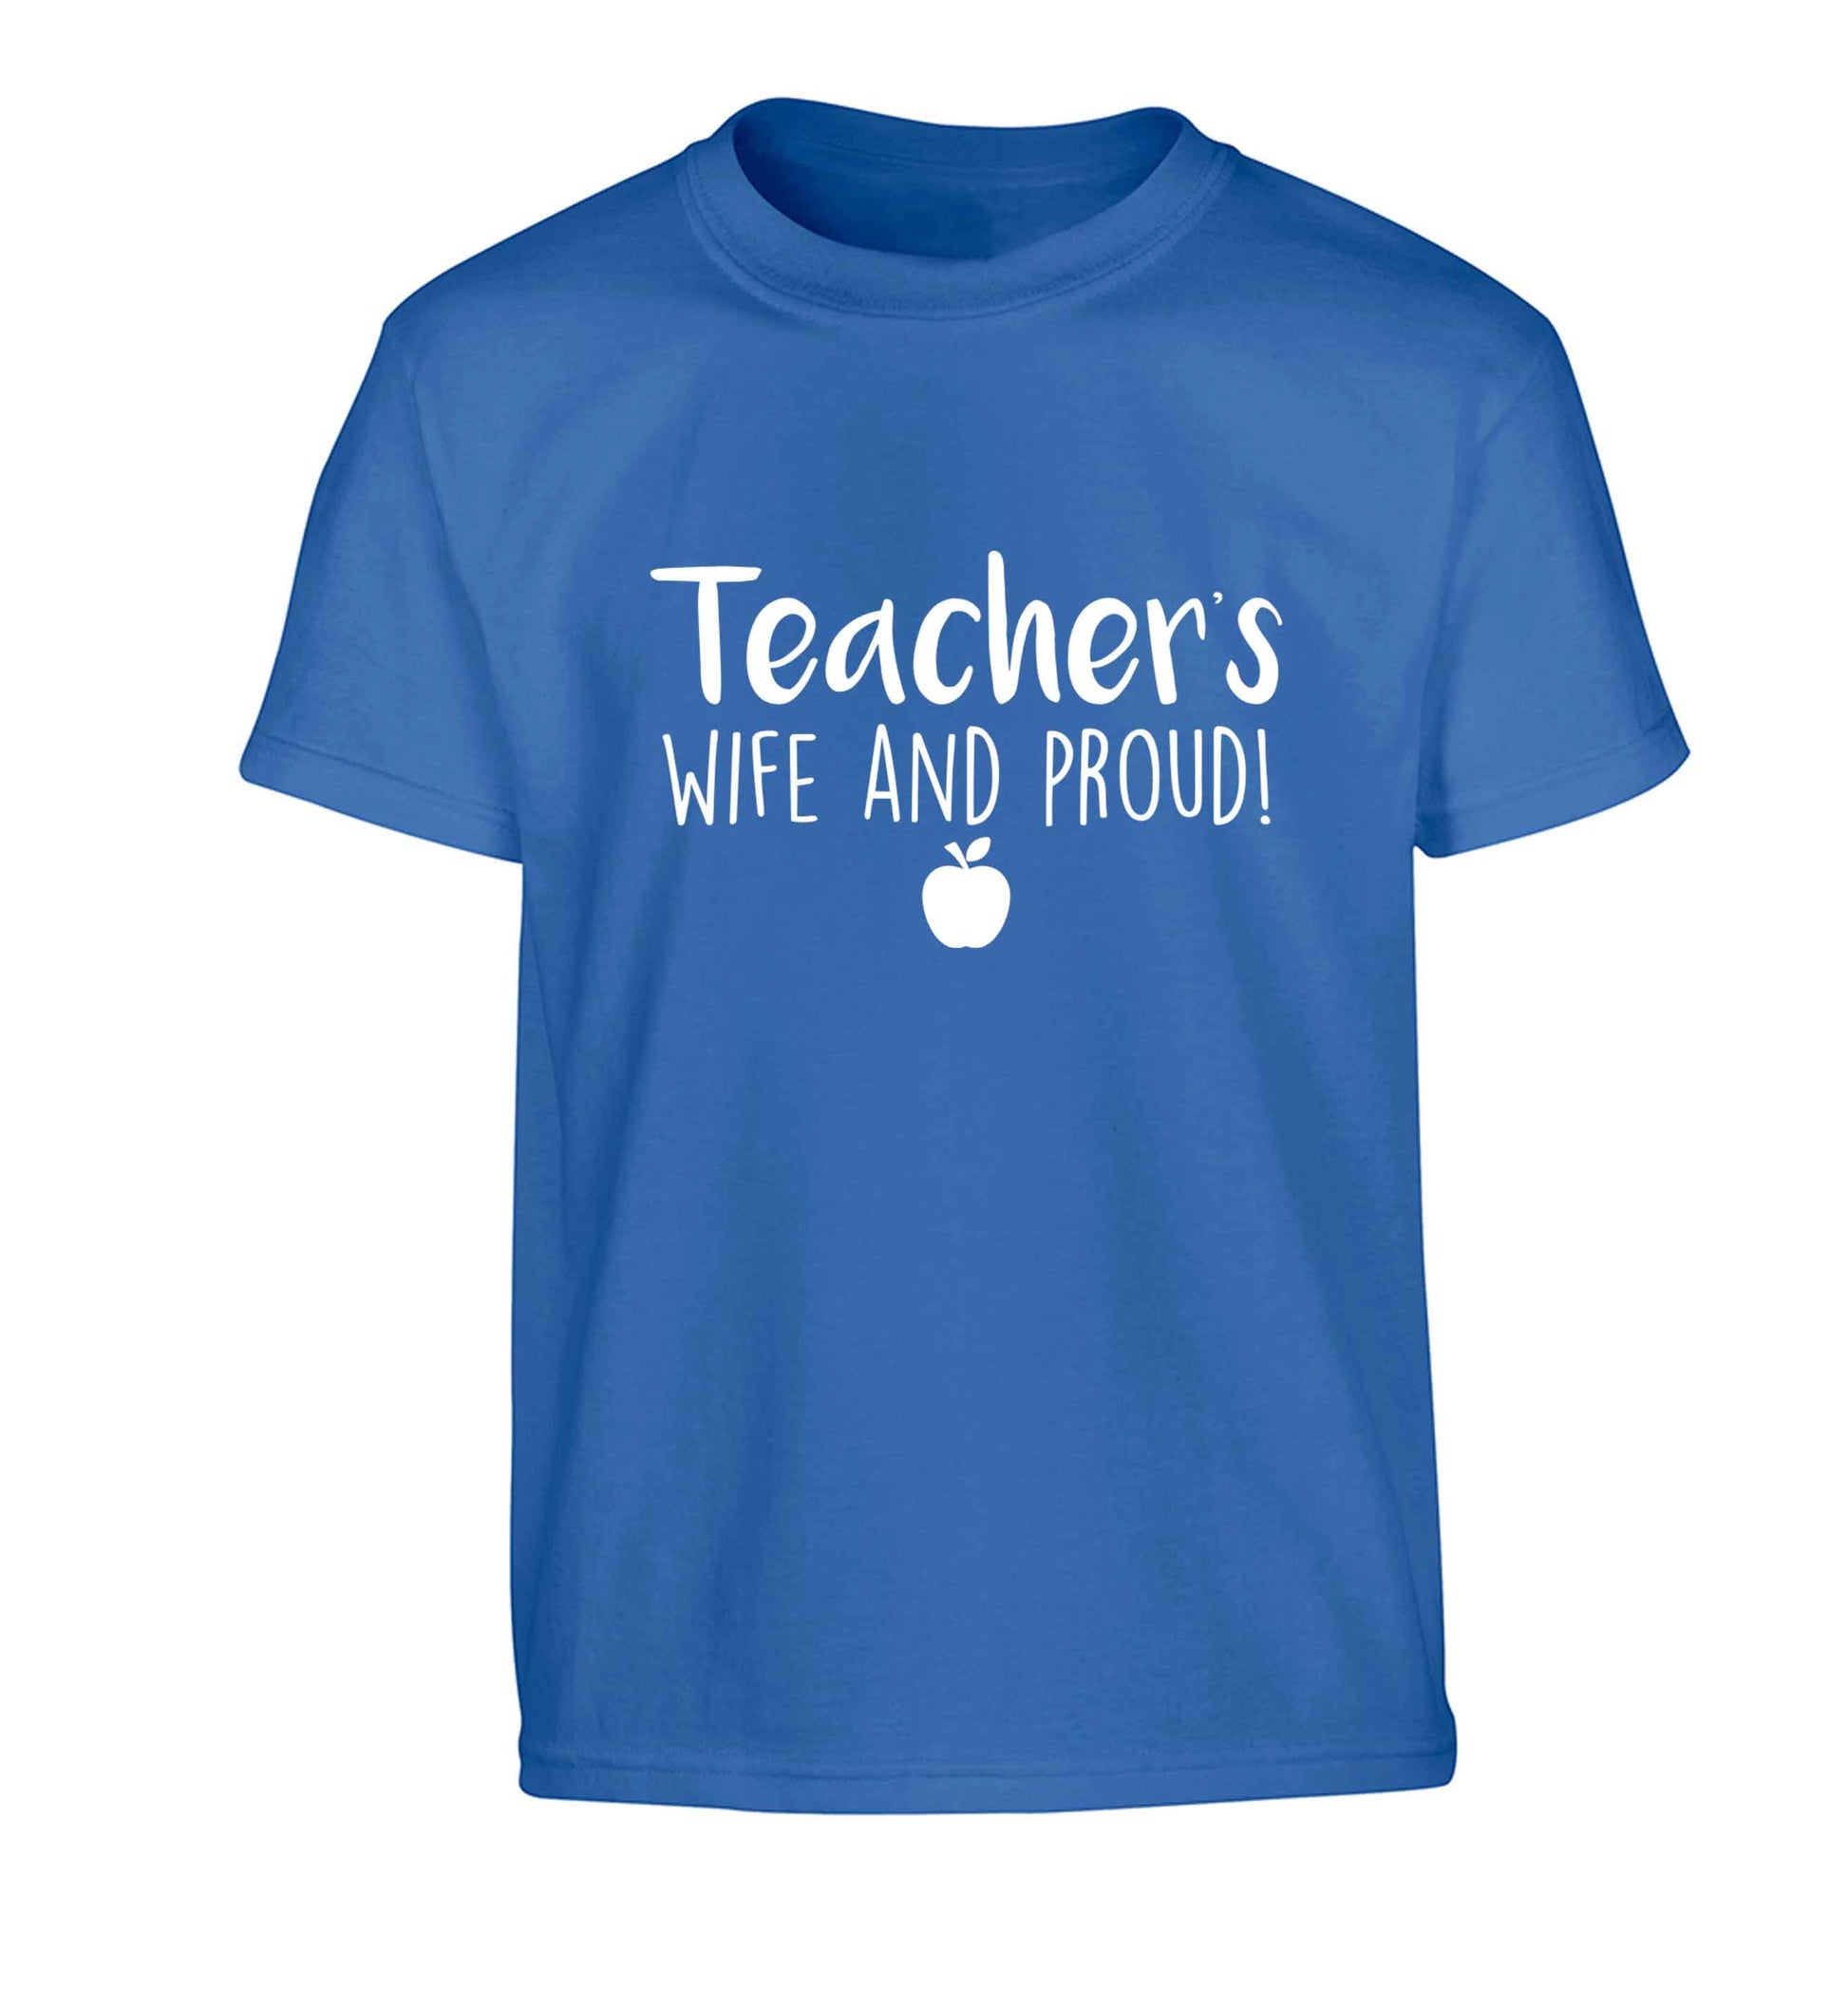 Teachers wife and proud Children's blue Tshirt 12-13 Years